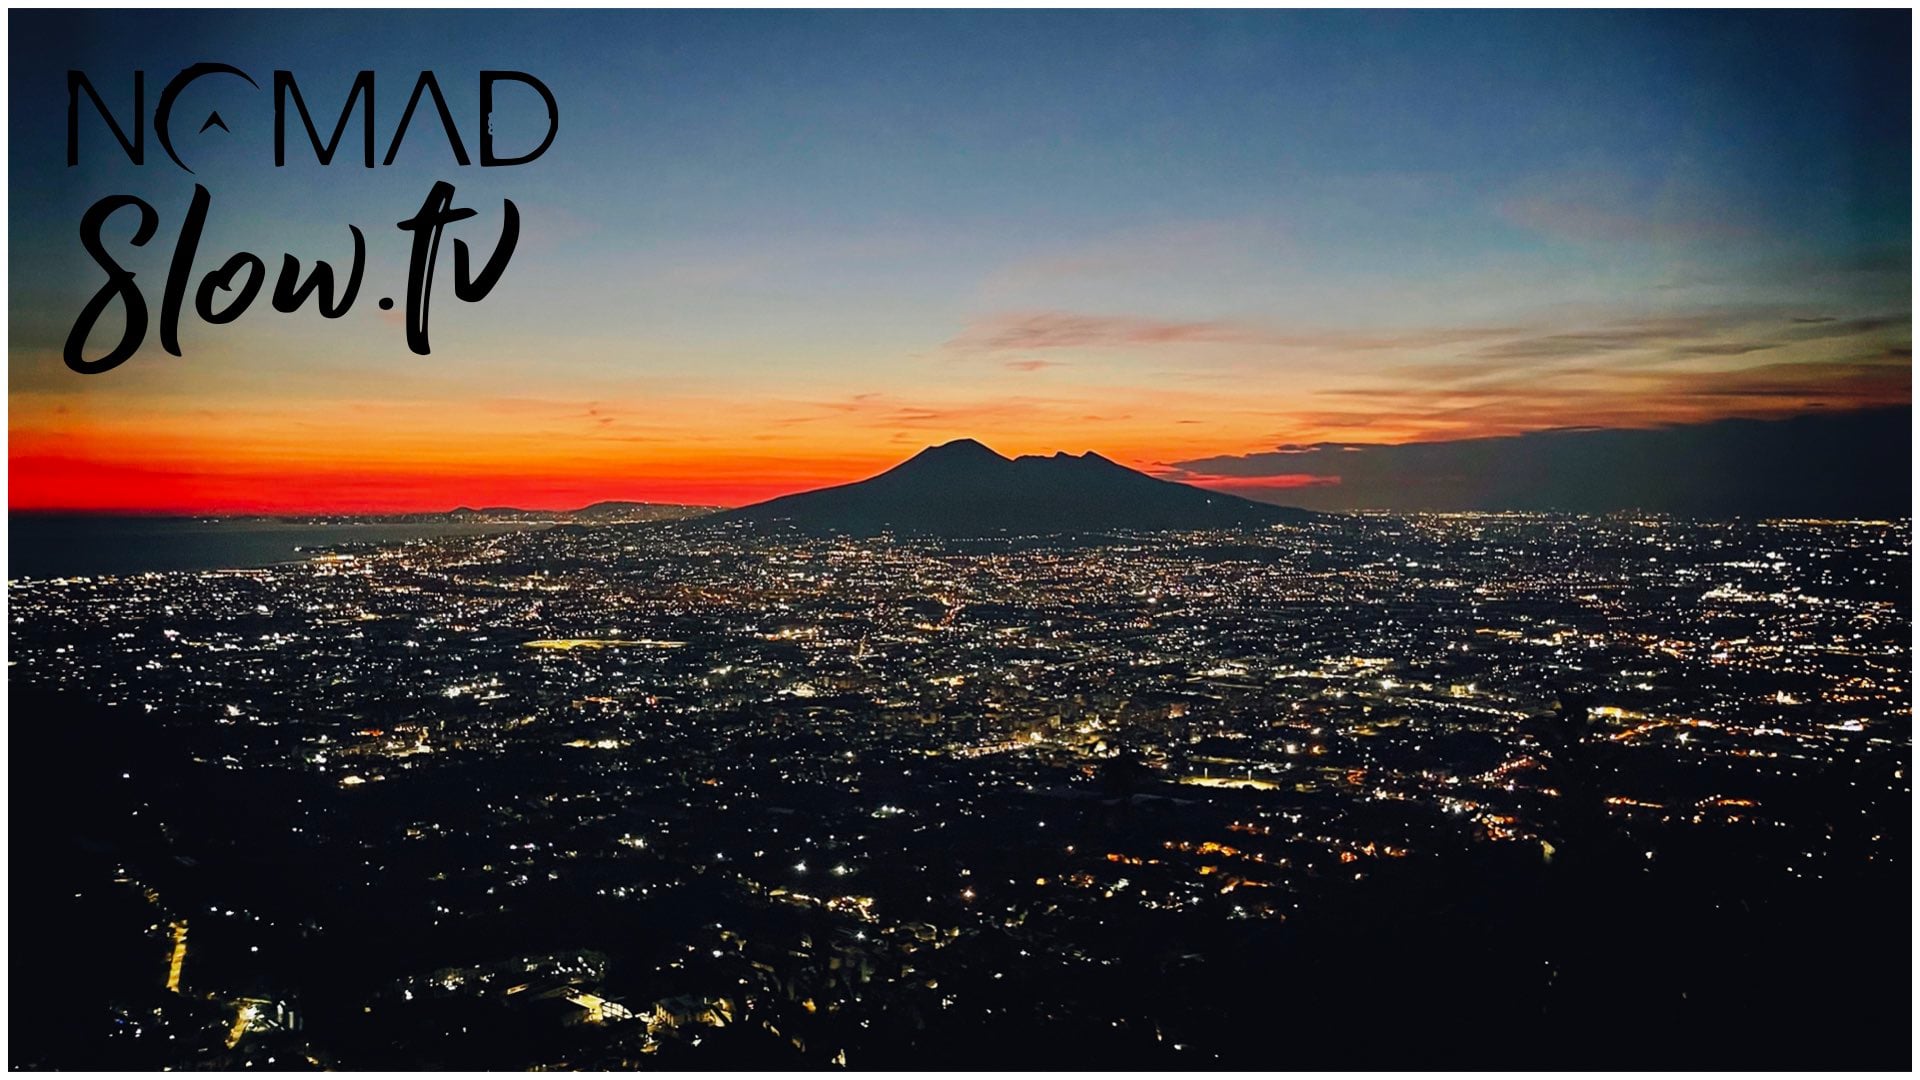 Volcano Mount Vesuvius at Night - Pompeii: The City Frozen In Time | Lost World Of Pompeii